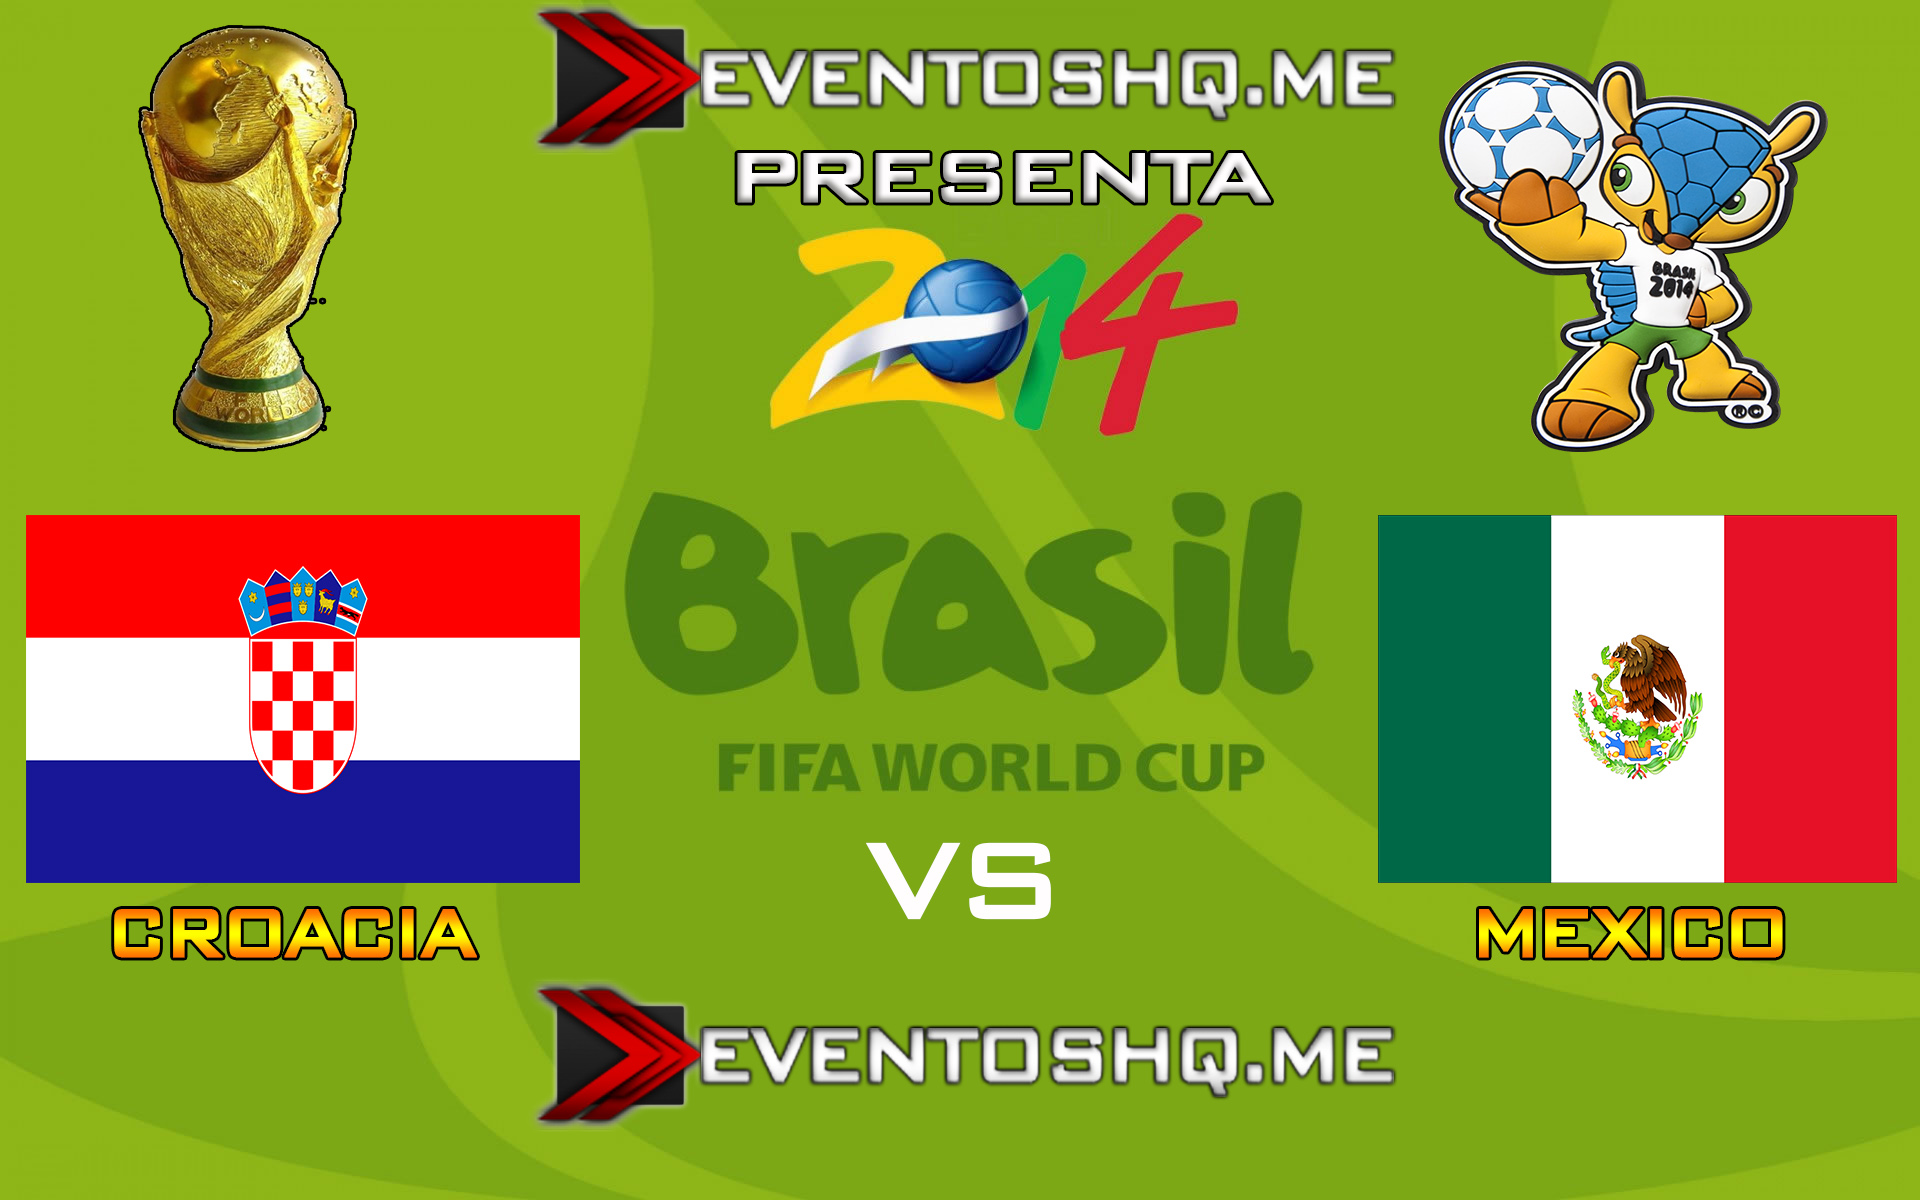 Ver en Vivo Croacia vs Mexico Mundial Brasil 2014 www.eventoshq.me